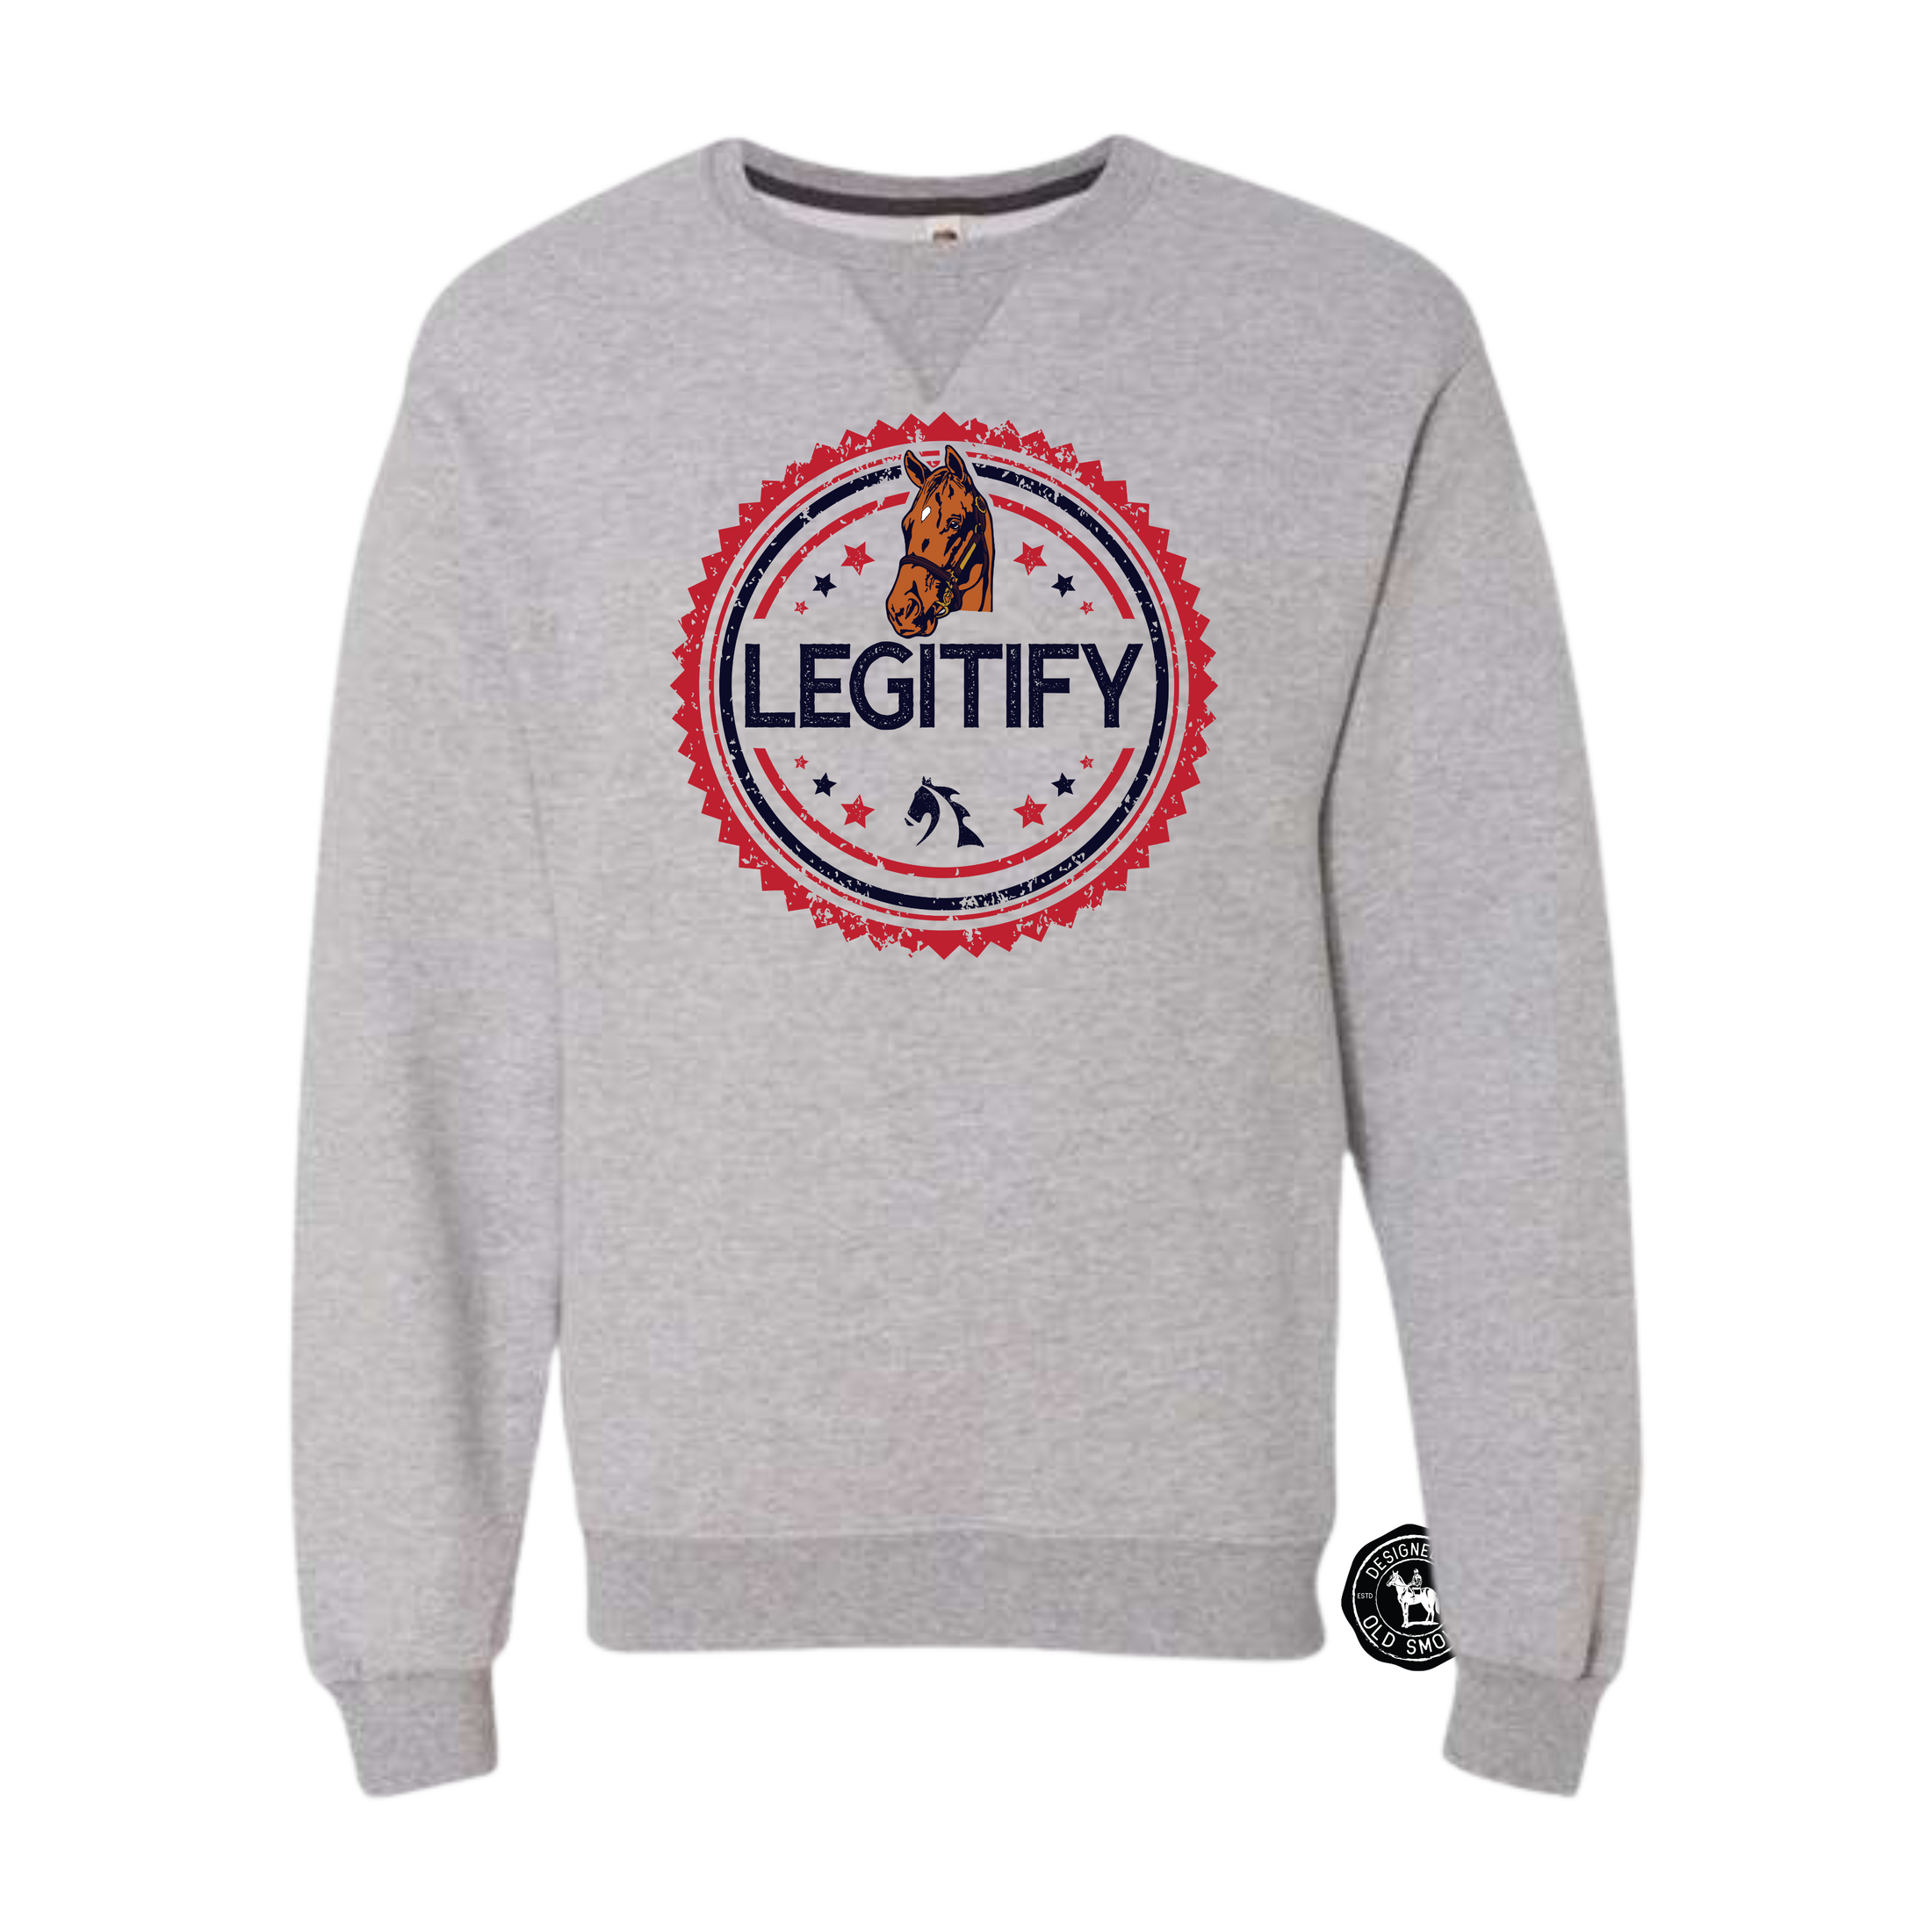 Legitify Crewneck Sweatshirt